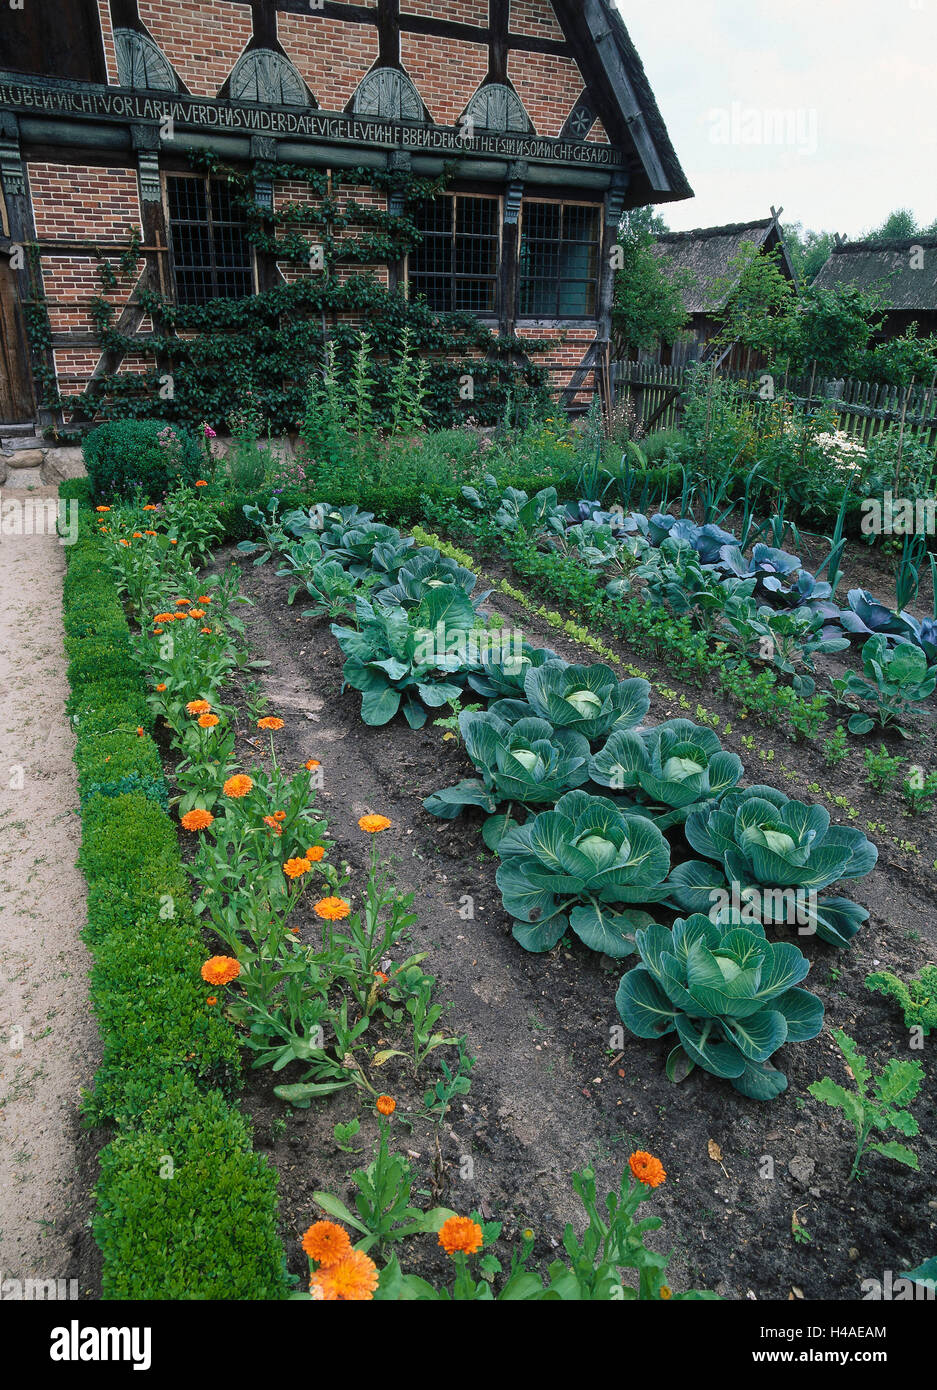 Garden, flowers, vegetables, Stock Photo